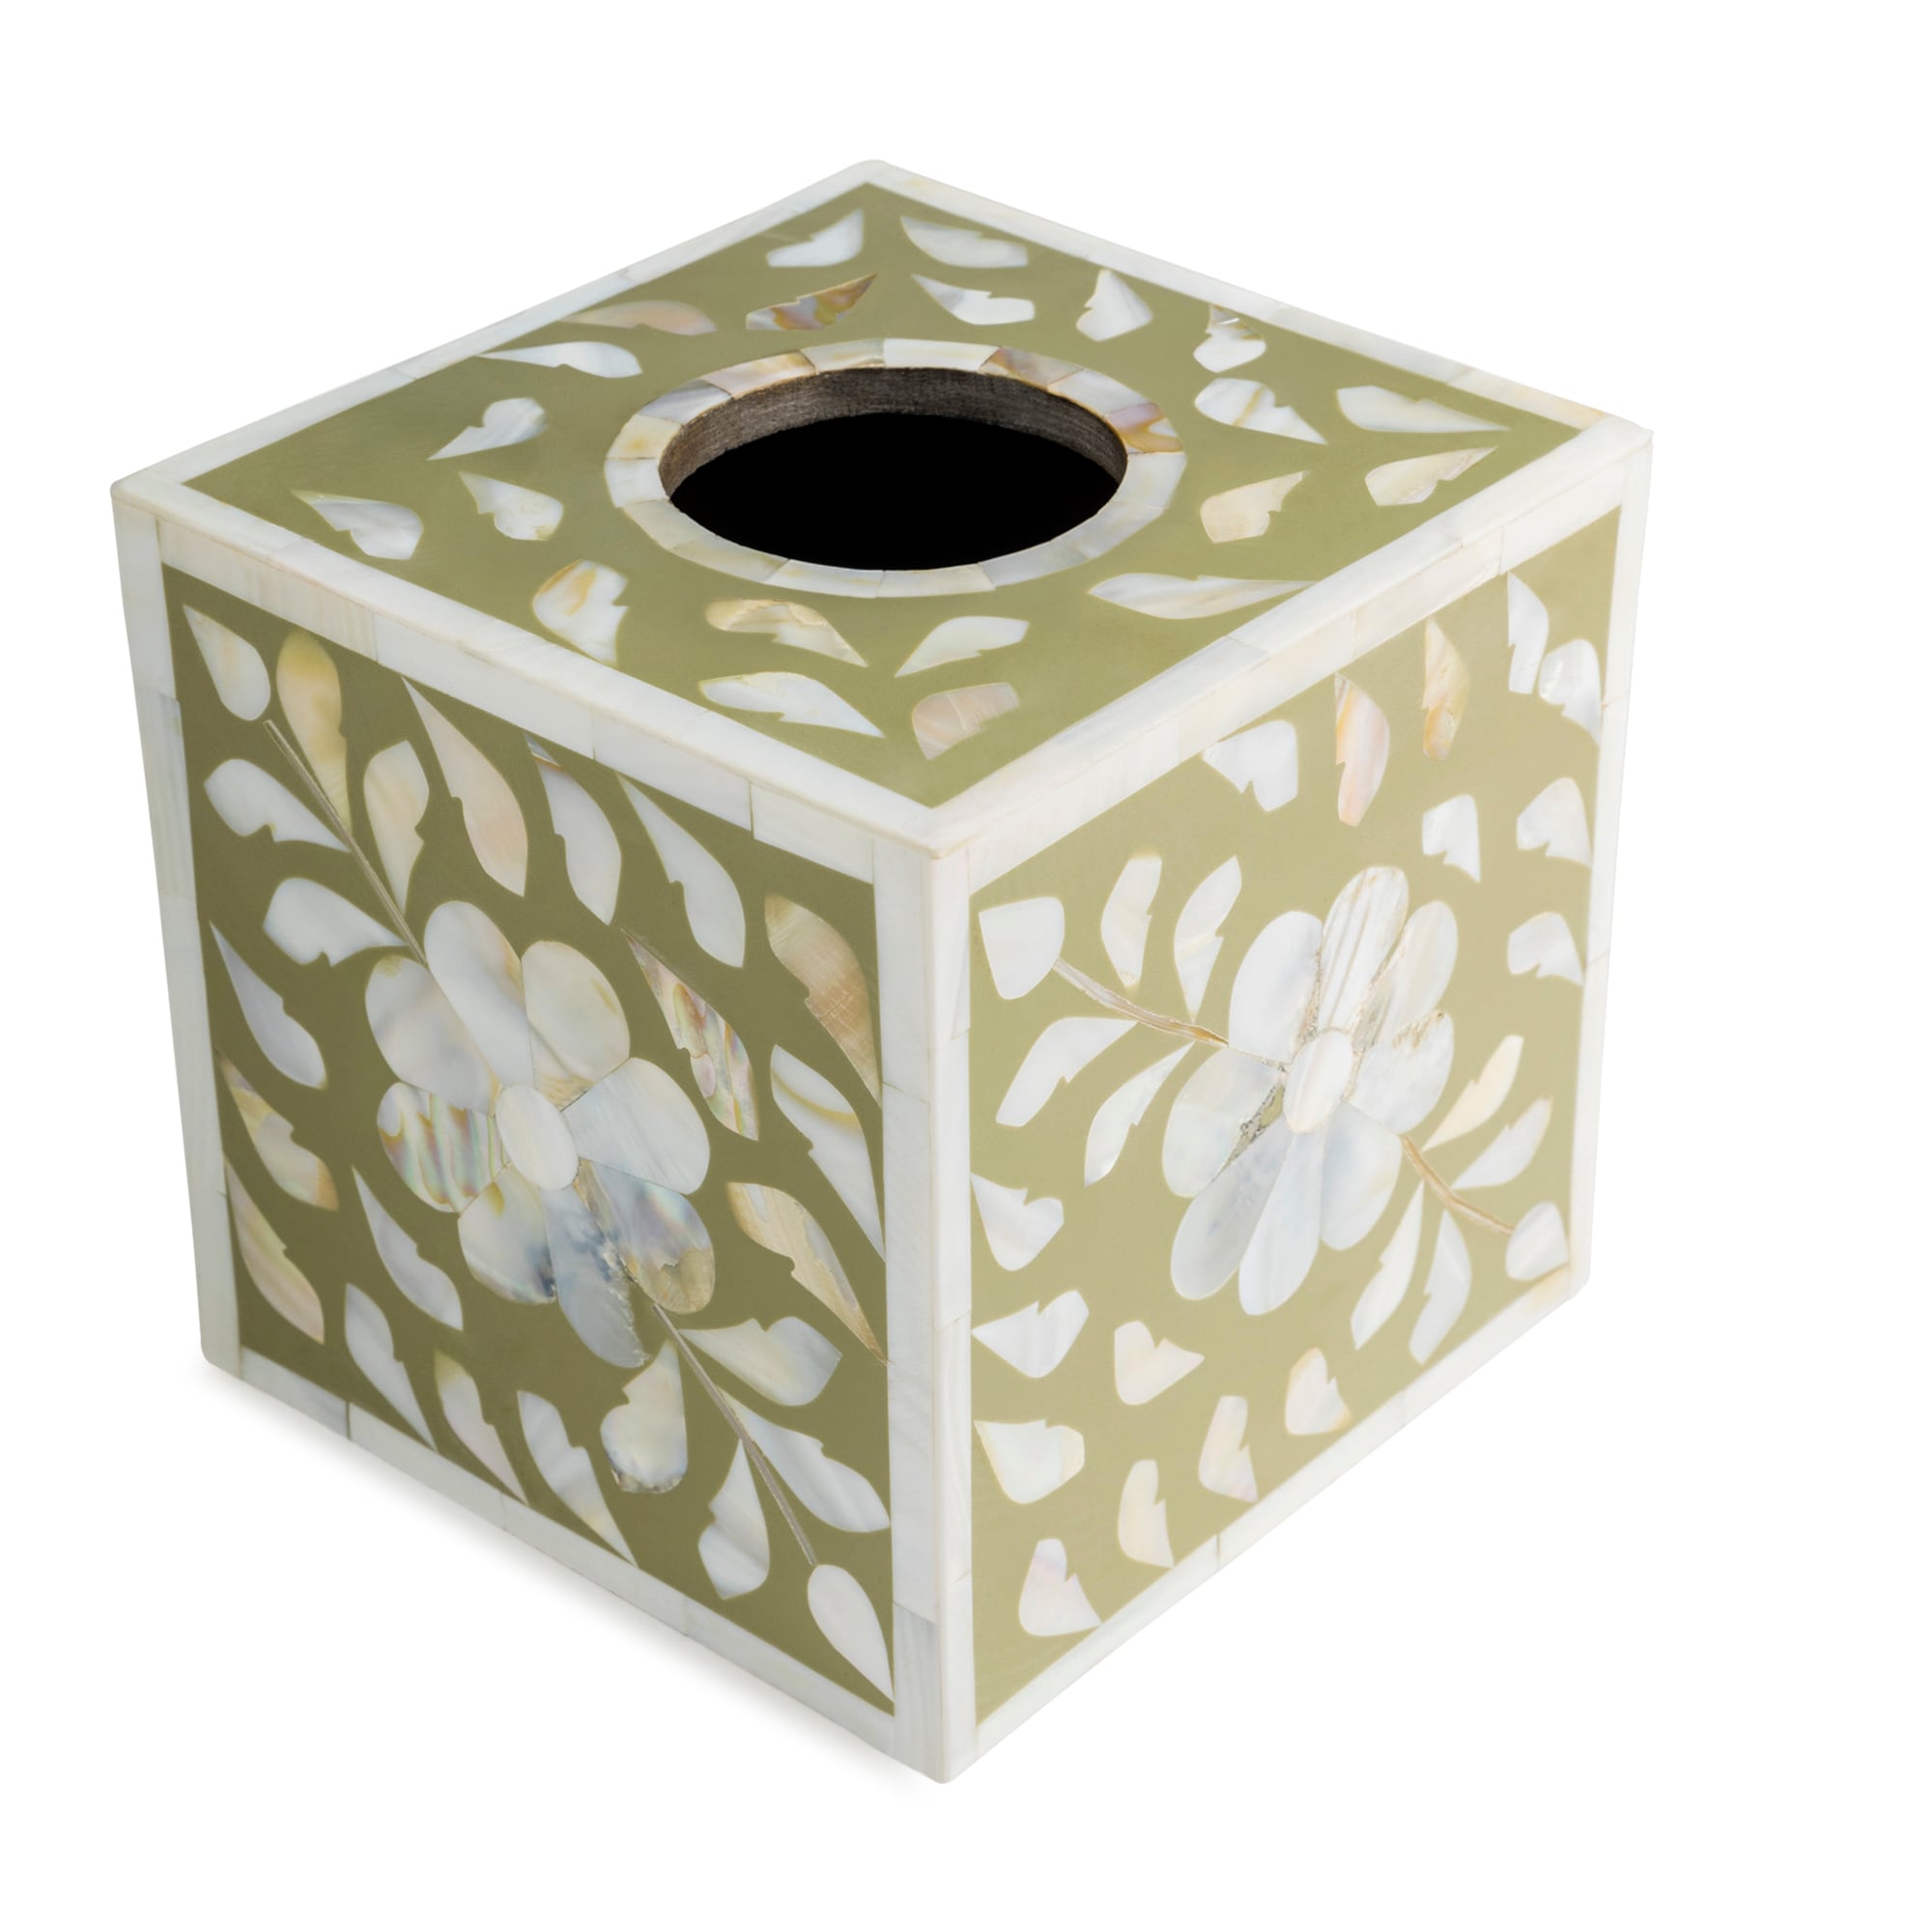 G G Collection Ceramic Tissue Box Cover